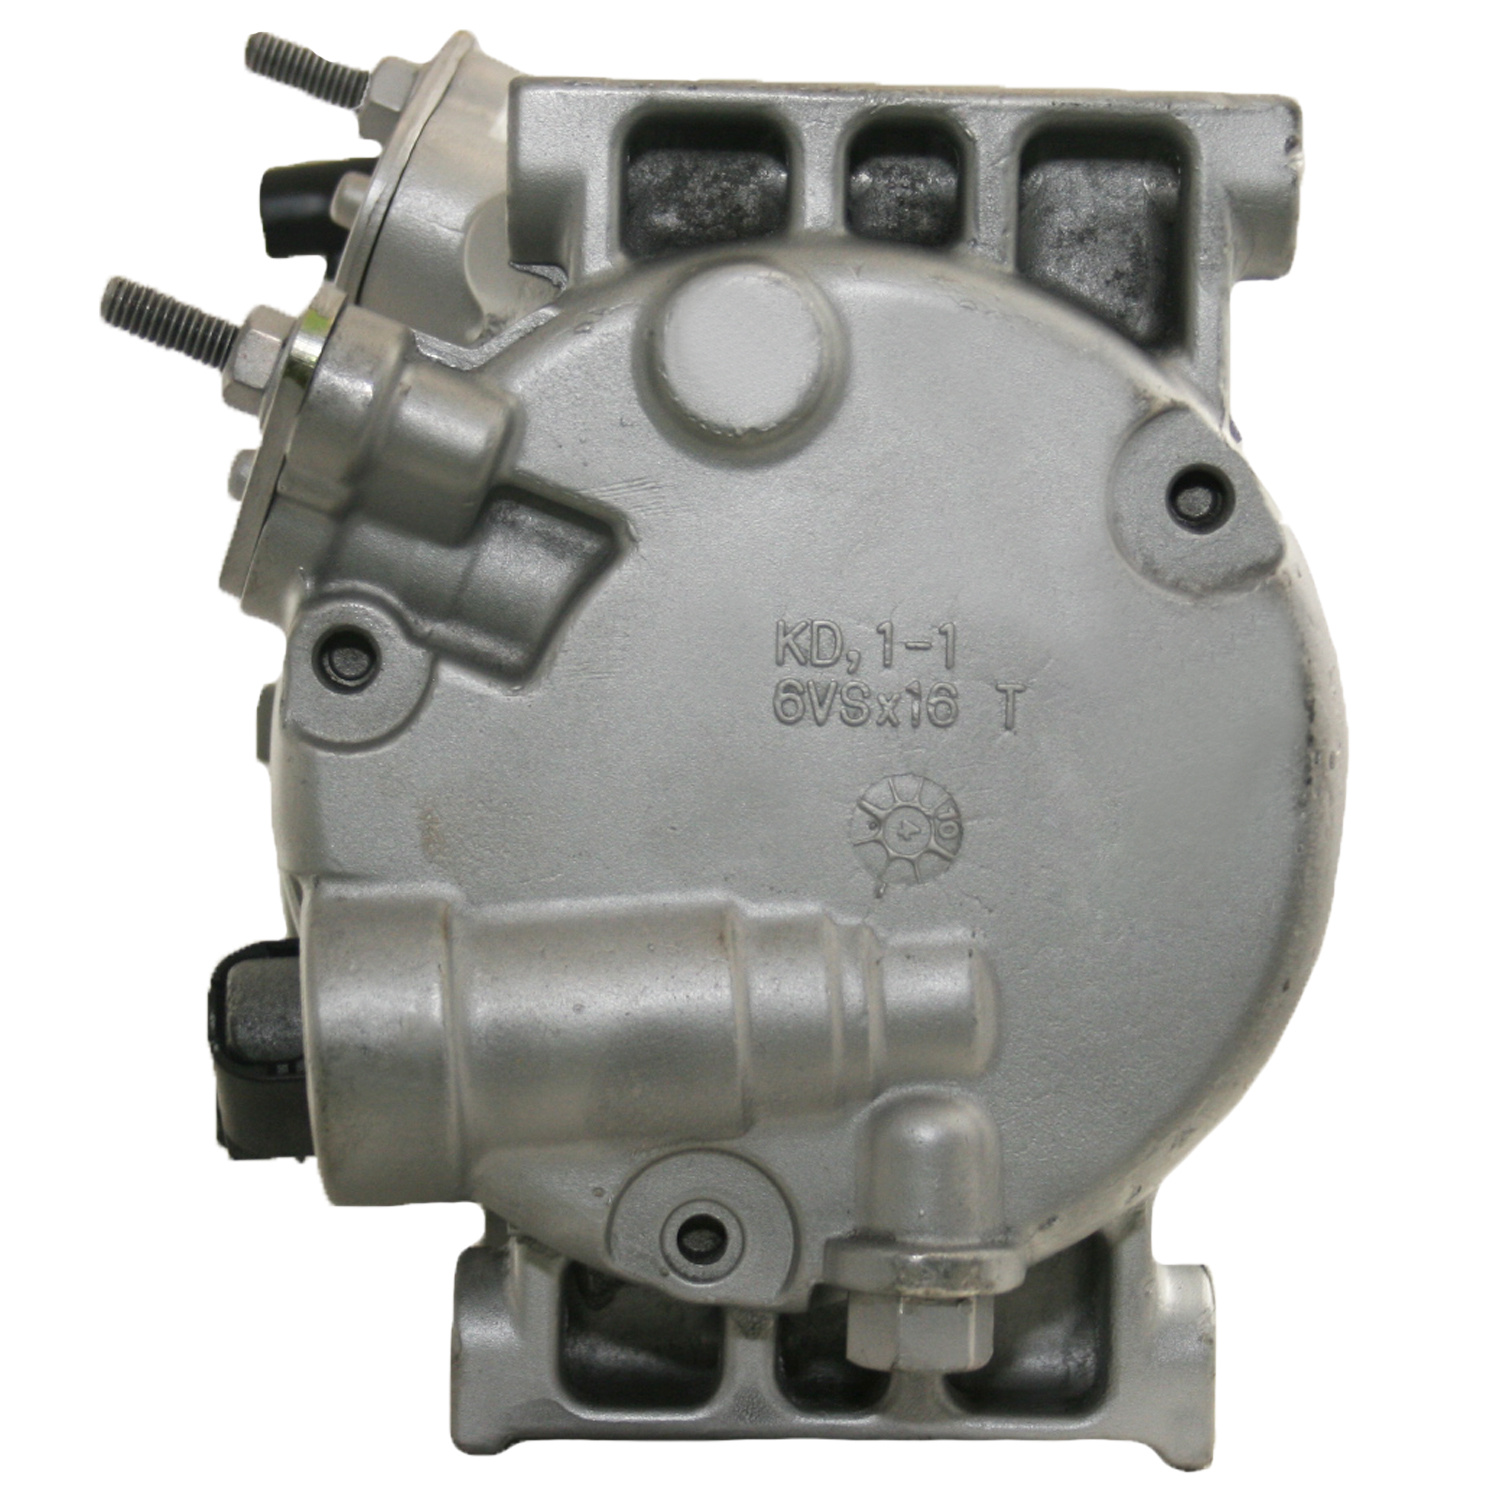 TCW Compressor 20380.6T1 Remanufactured Product Image field_60b6a13a6e67c